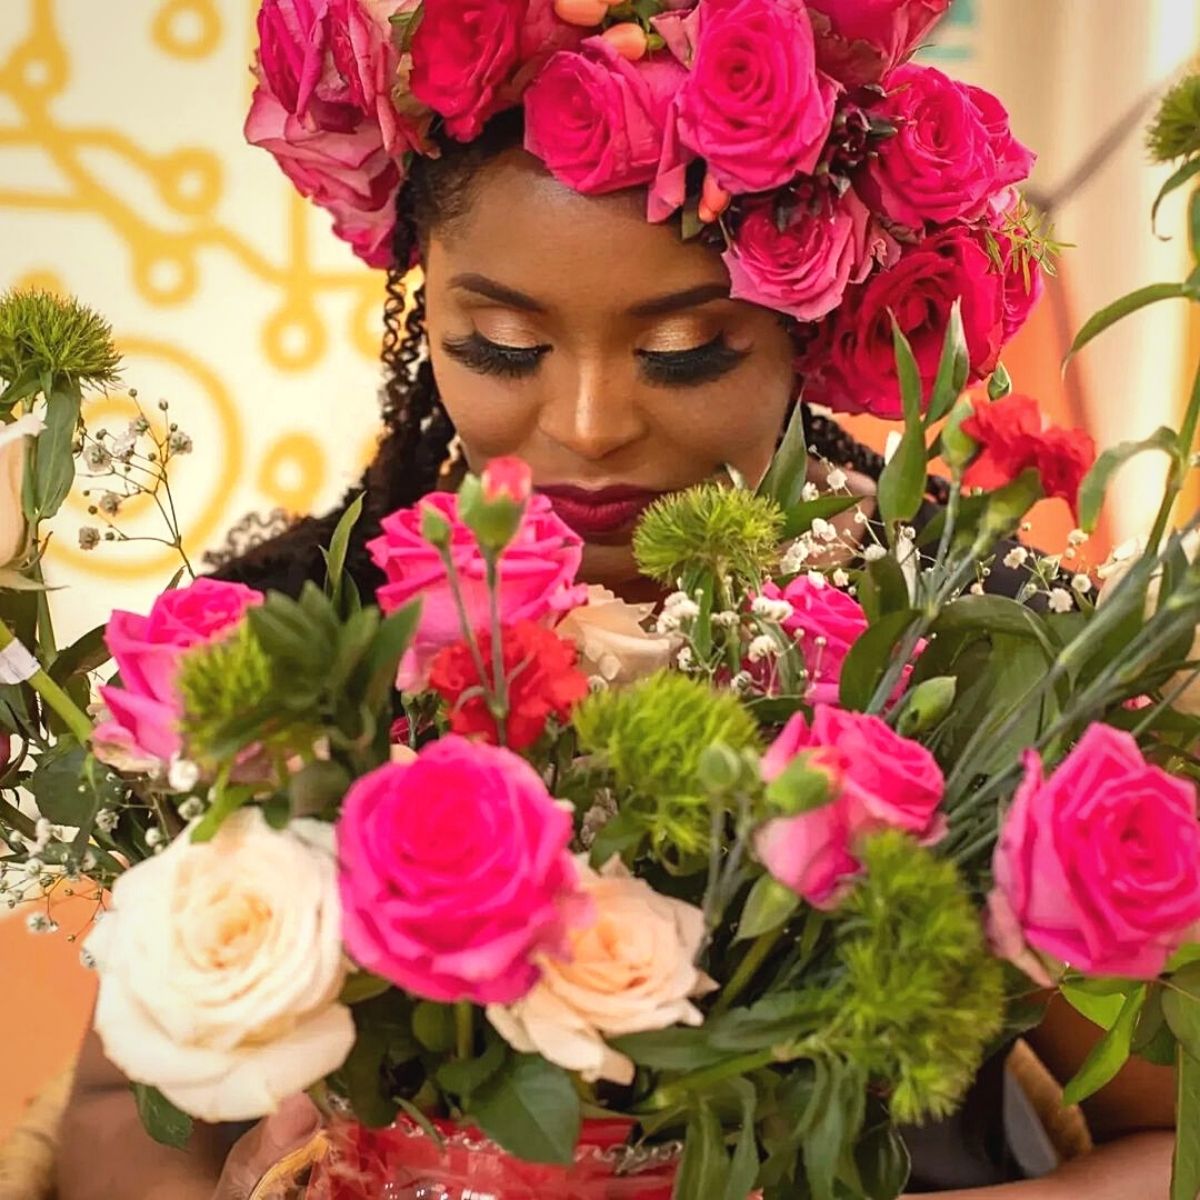 kenyan-floral-festival-seeking-to-foster-a-flower-loving-culture-featured